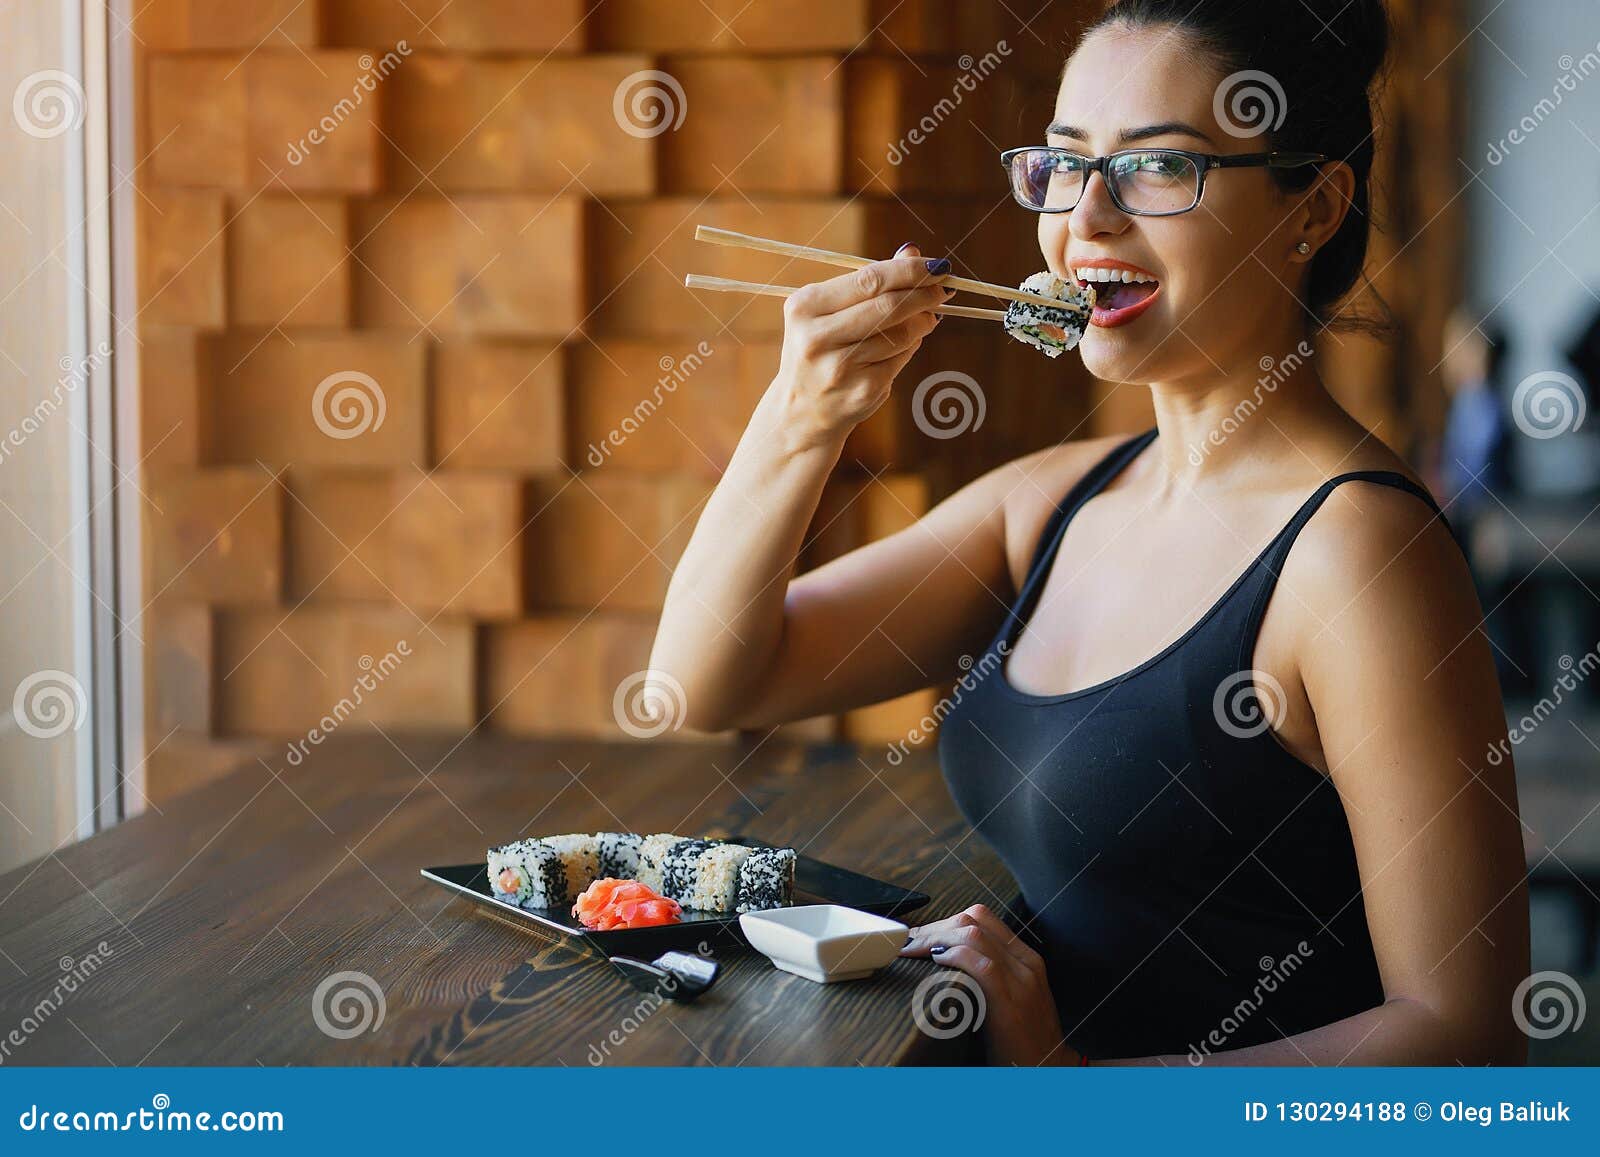 Девушка есть суши. Суши на девушке. Девушка ест роллы. Девушка на улице ест суши. Девушка ест суши дома.